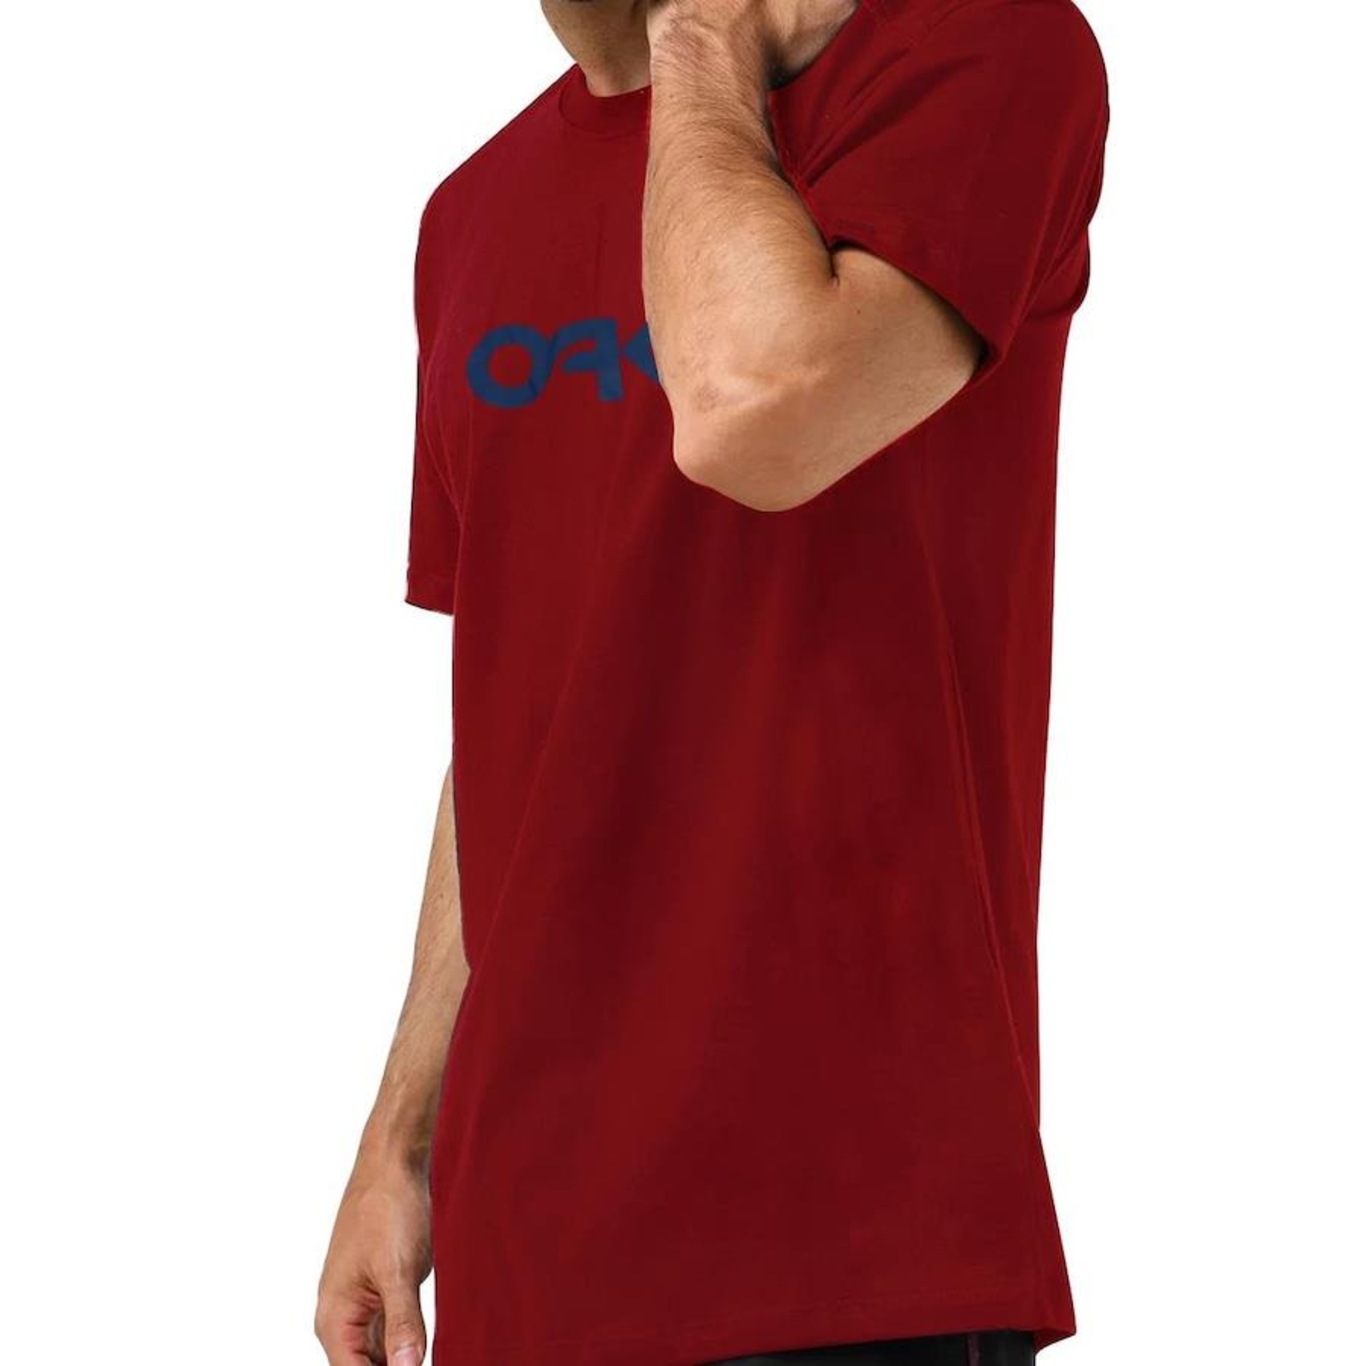 Camiseta Oakley Vermelha Tam: GG